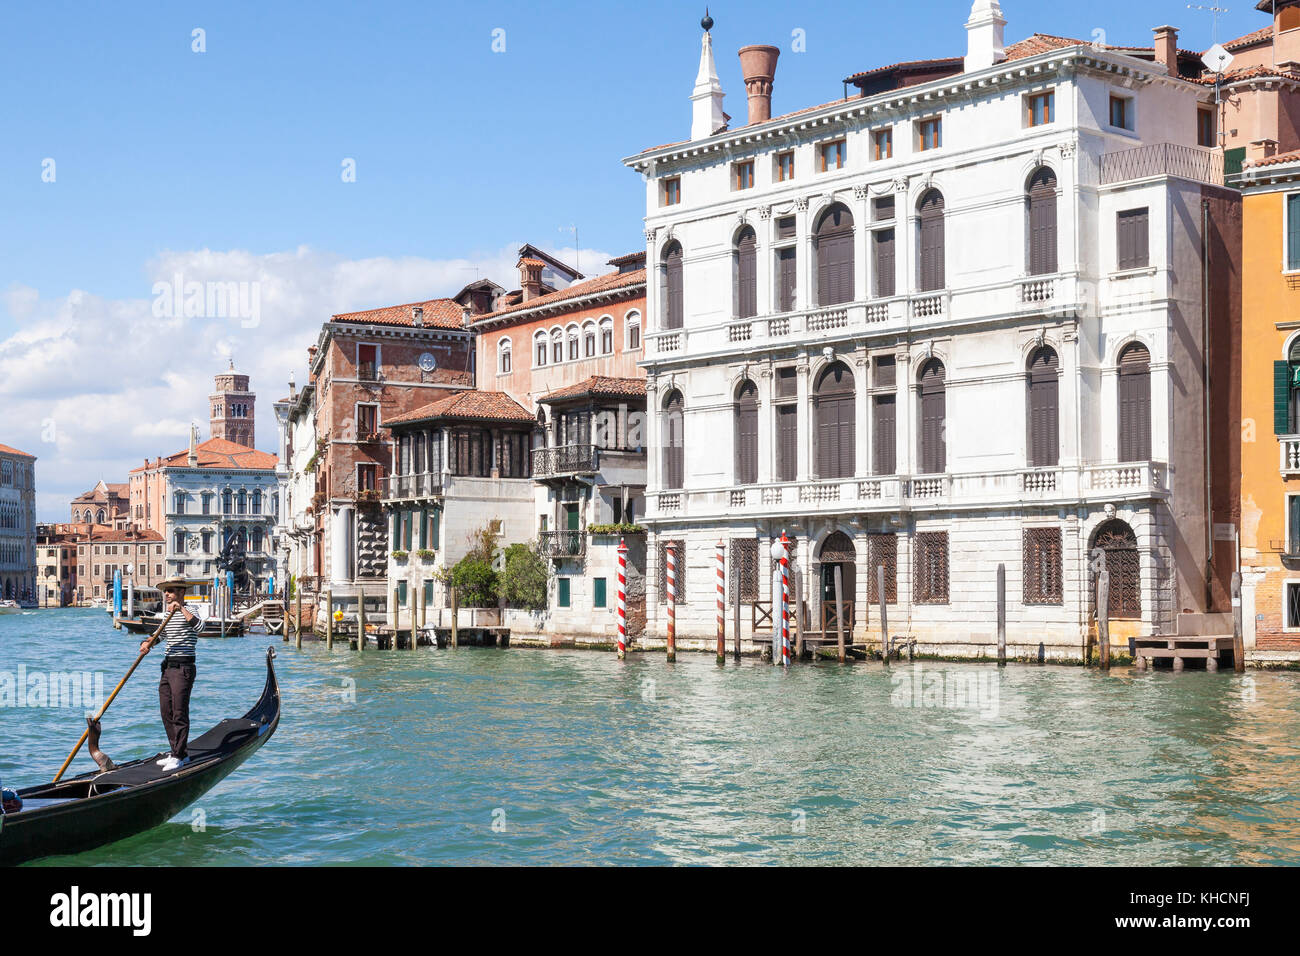 Gondoliere auf dem Canal Grande, Venedig, Italien vor dem Palazzo und Palazzo Falier Canossa Giustinian-Lolin Stockfoto